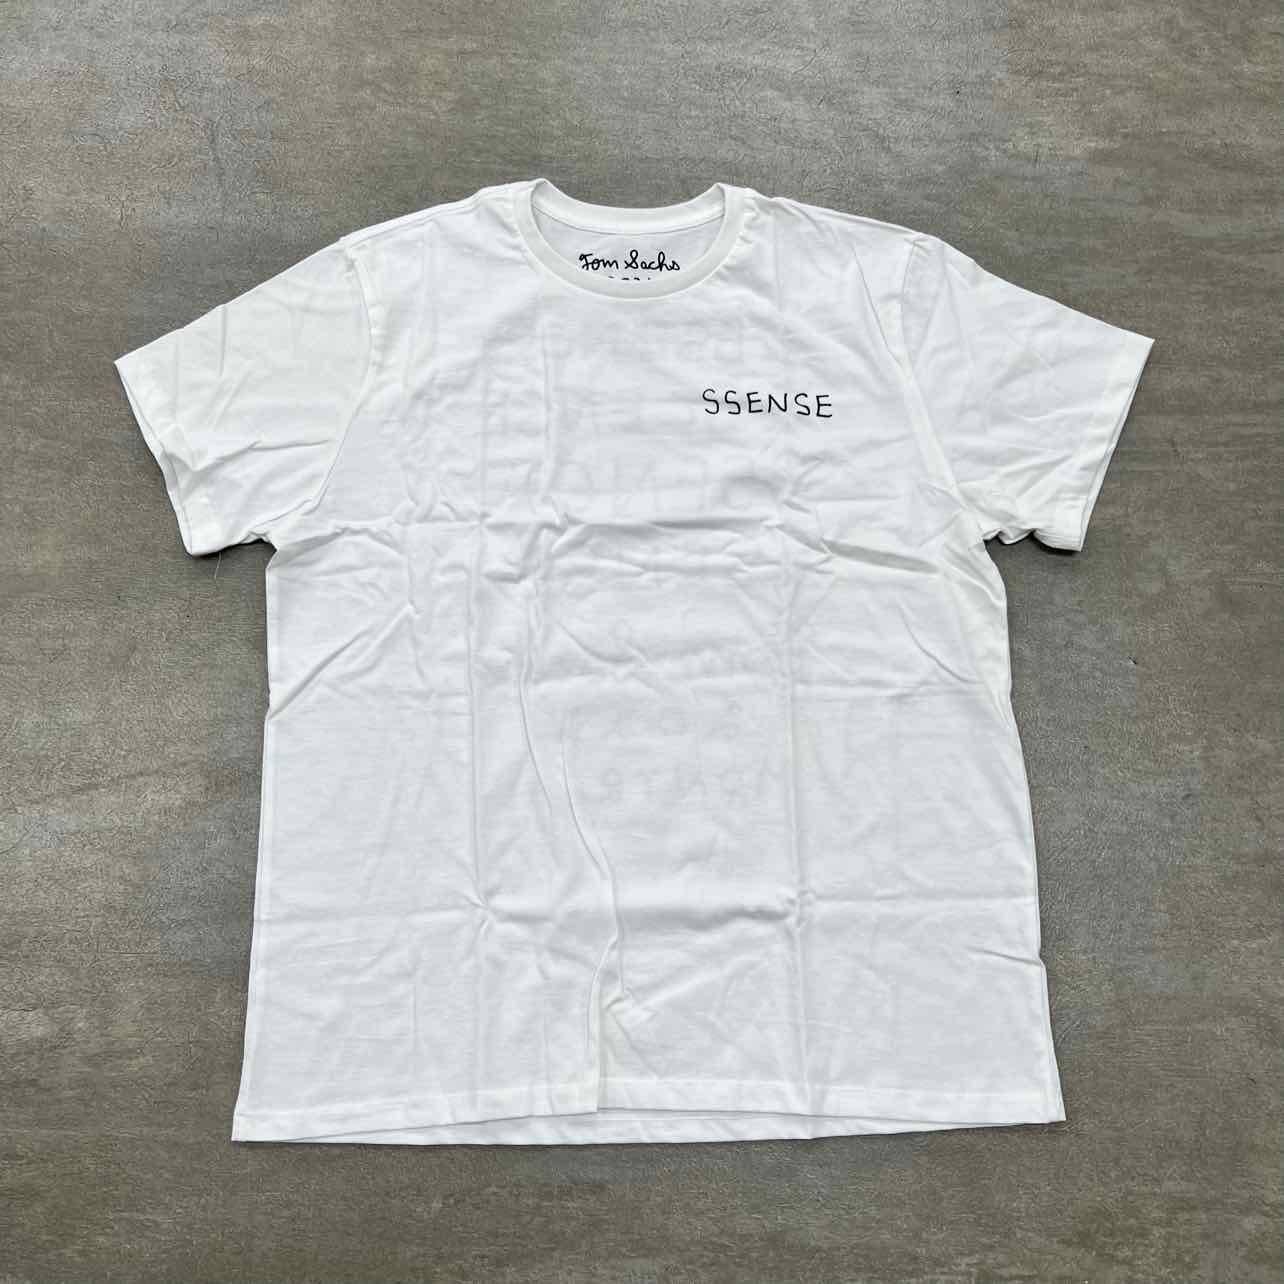 Tom Sachs T-Shirt &quot;SSENSE&quot; White New Size L